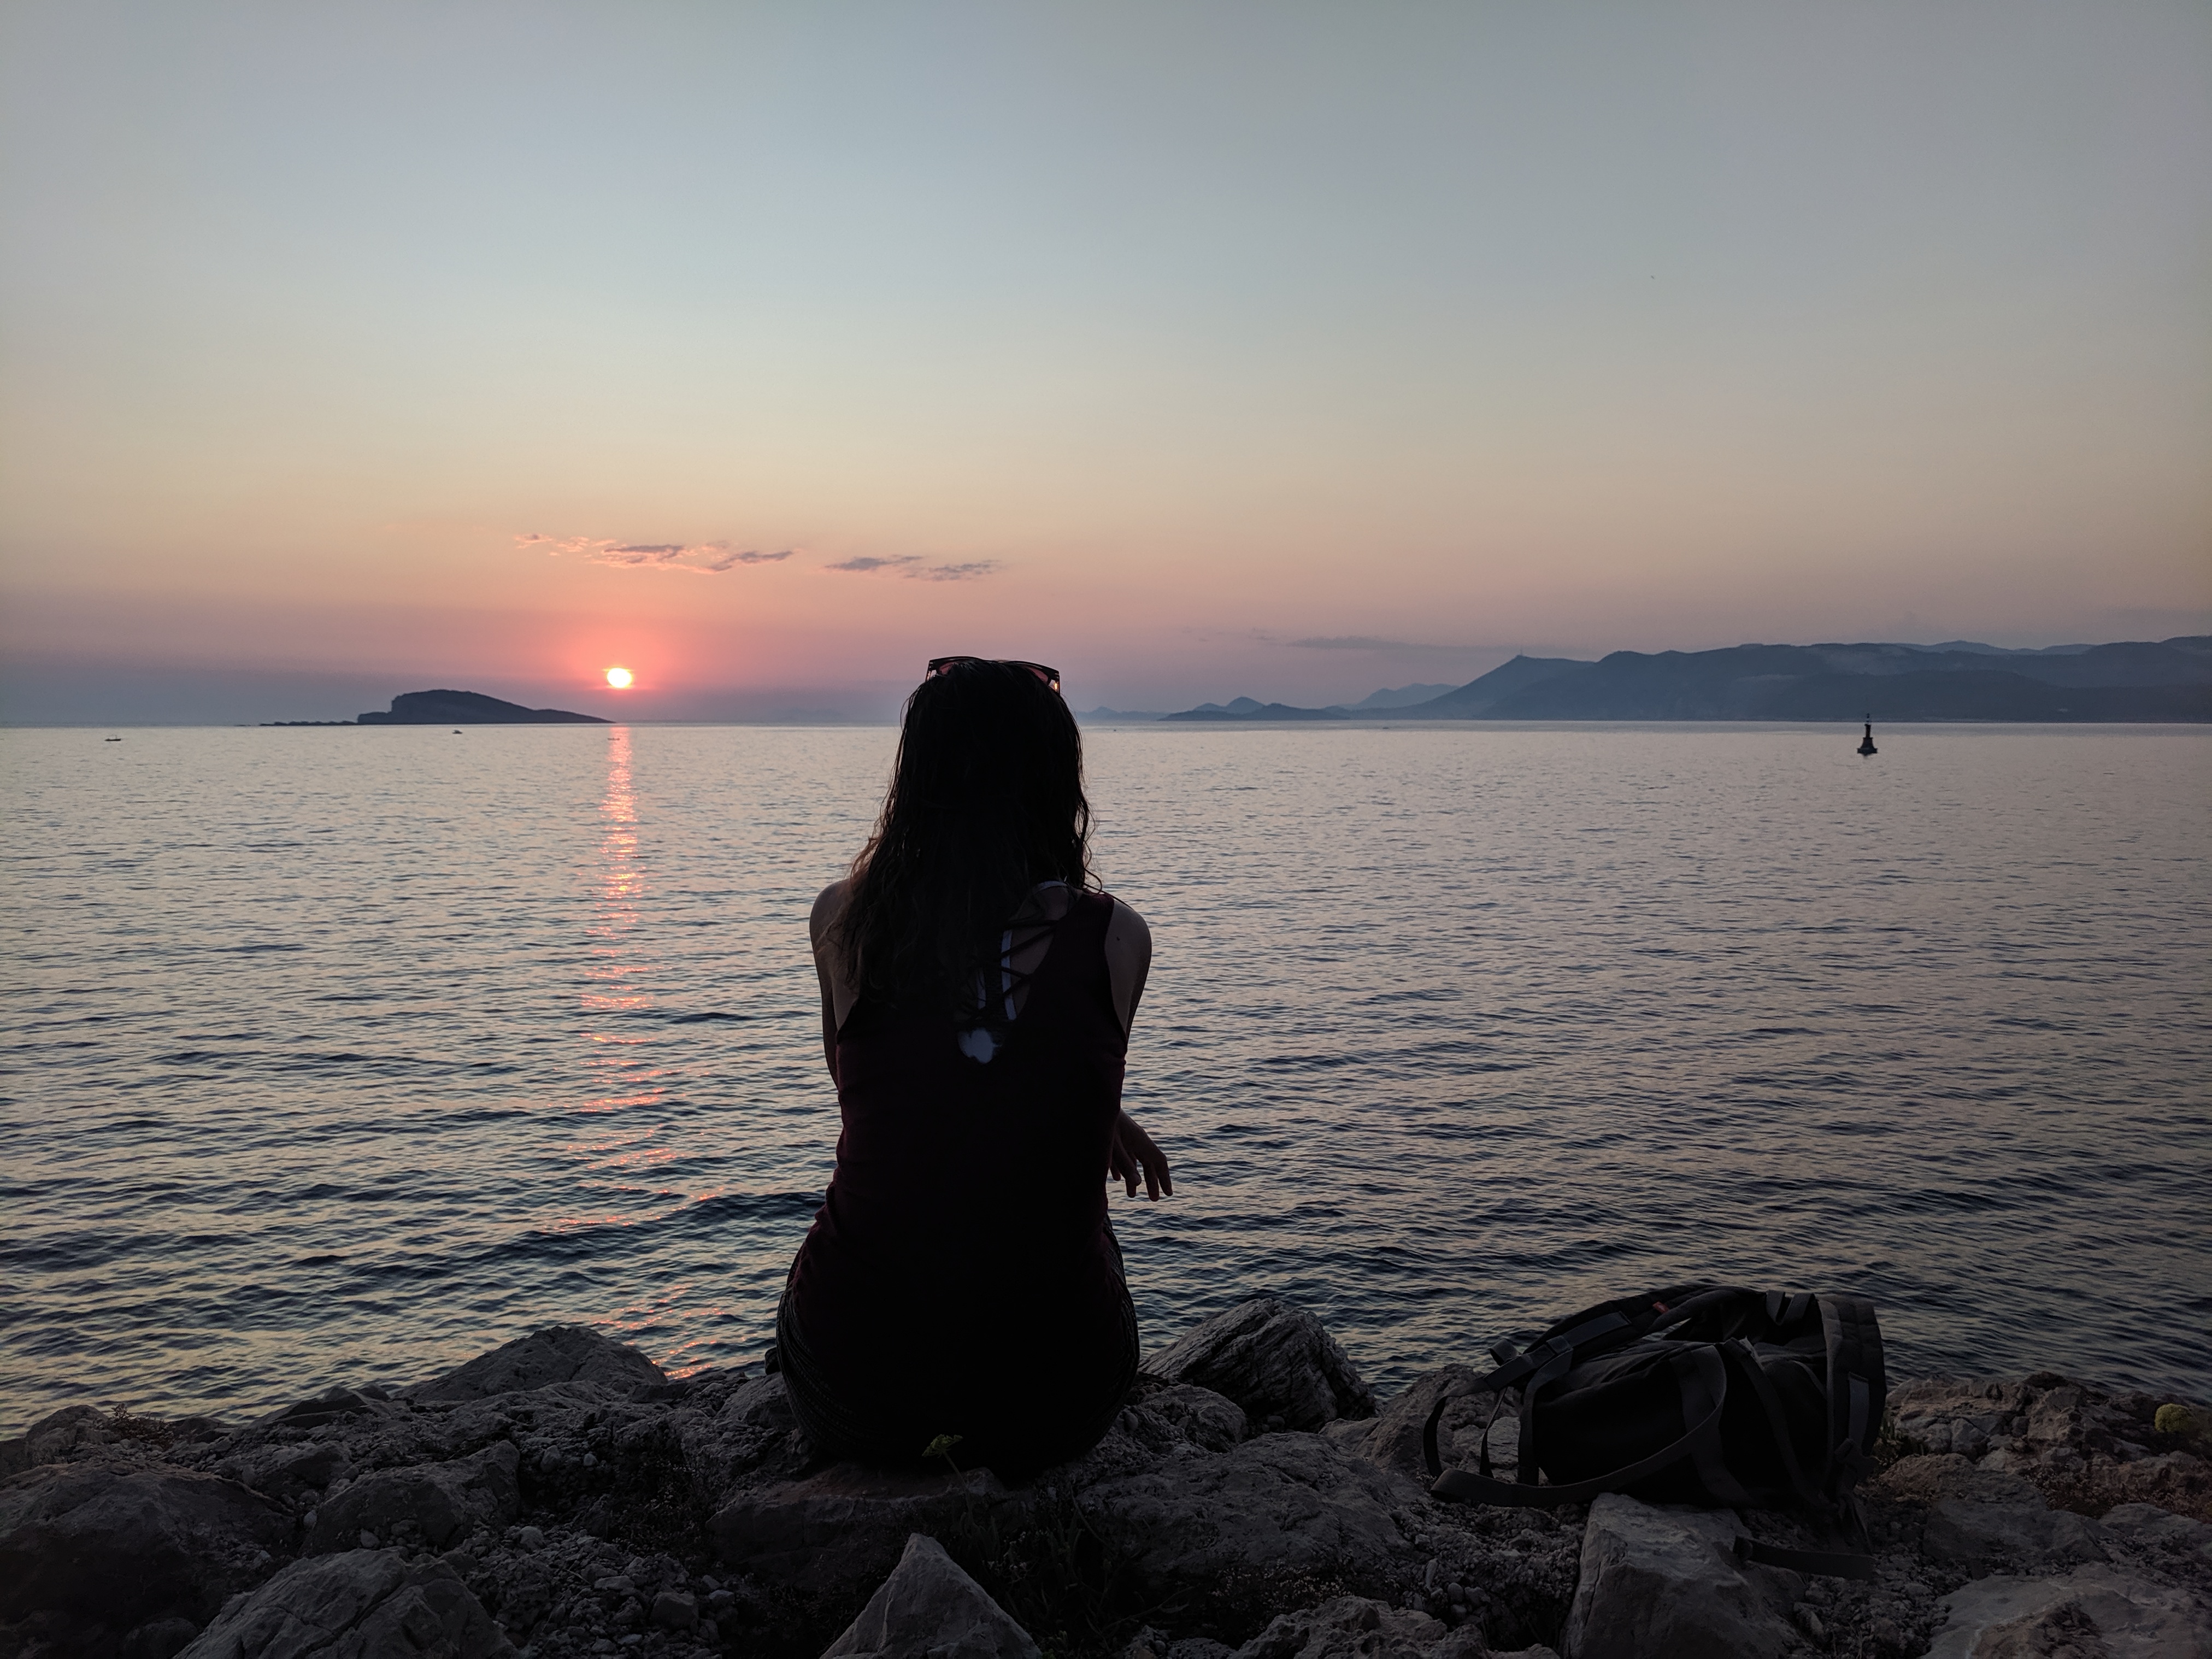 Taking in an epic sunset in Croatia